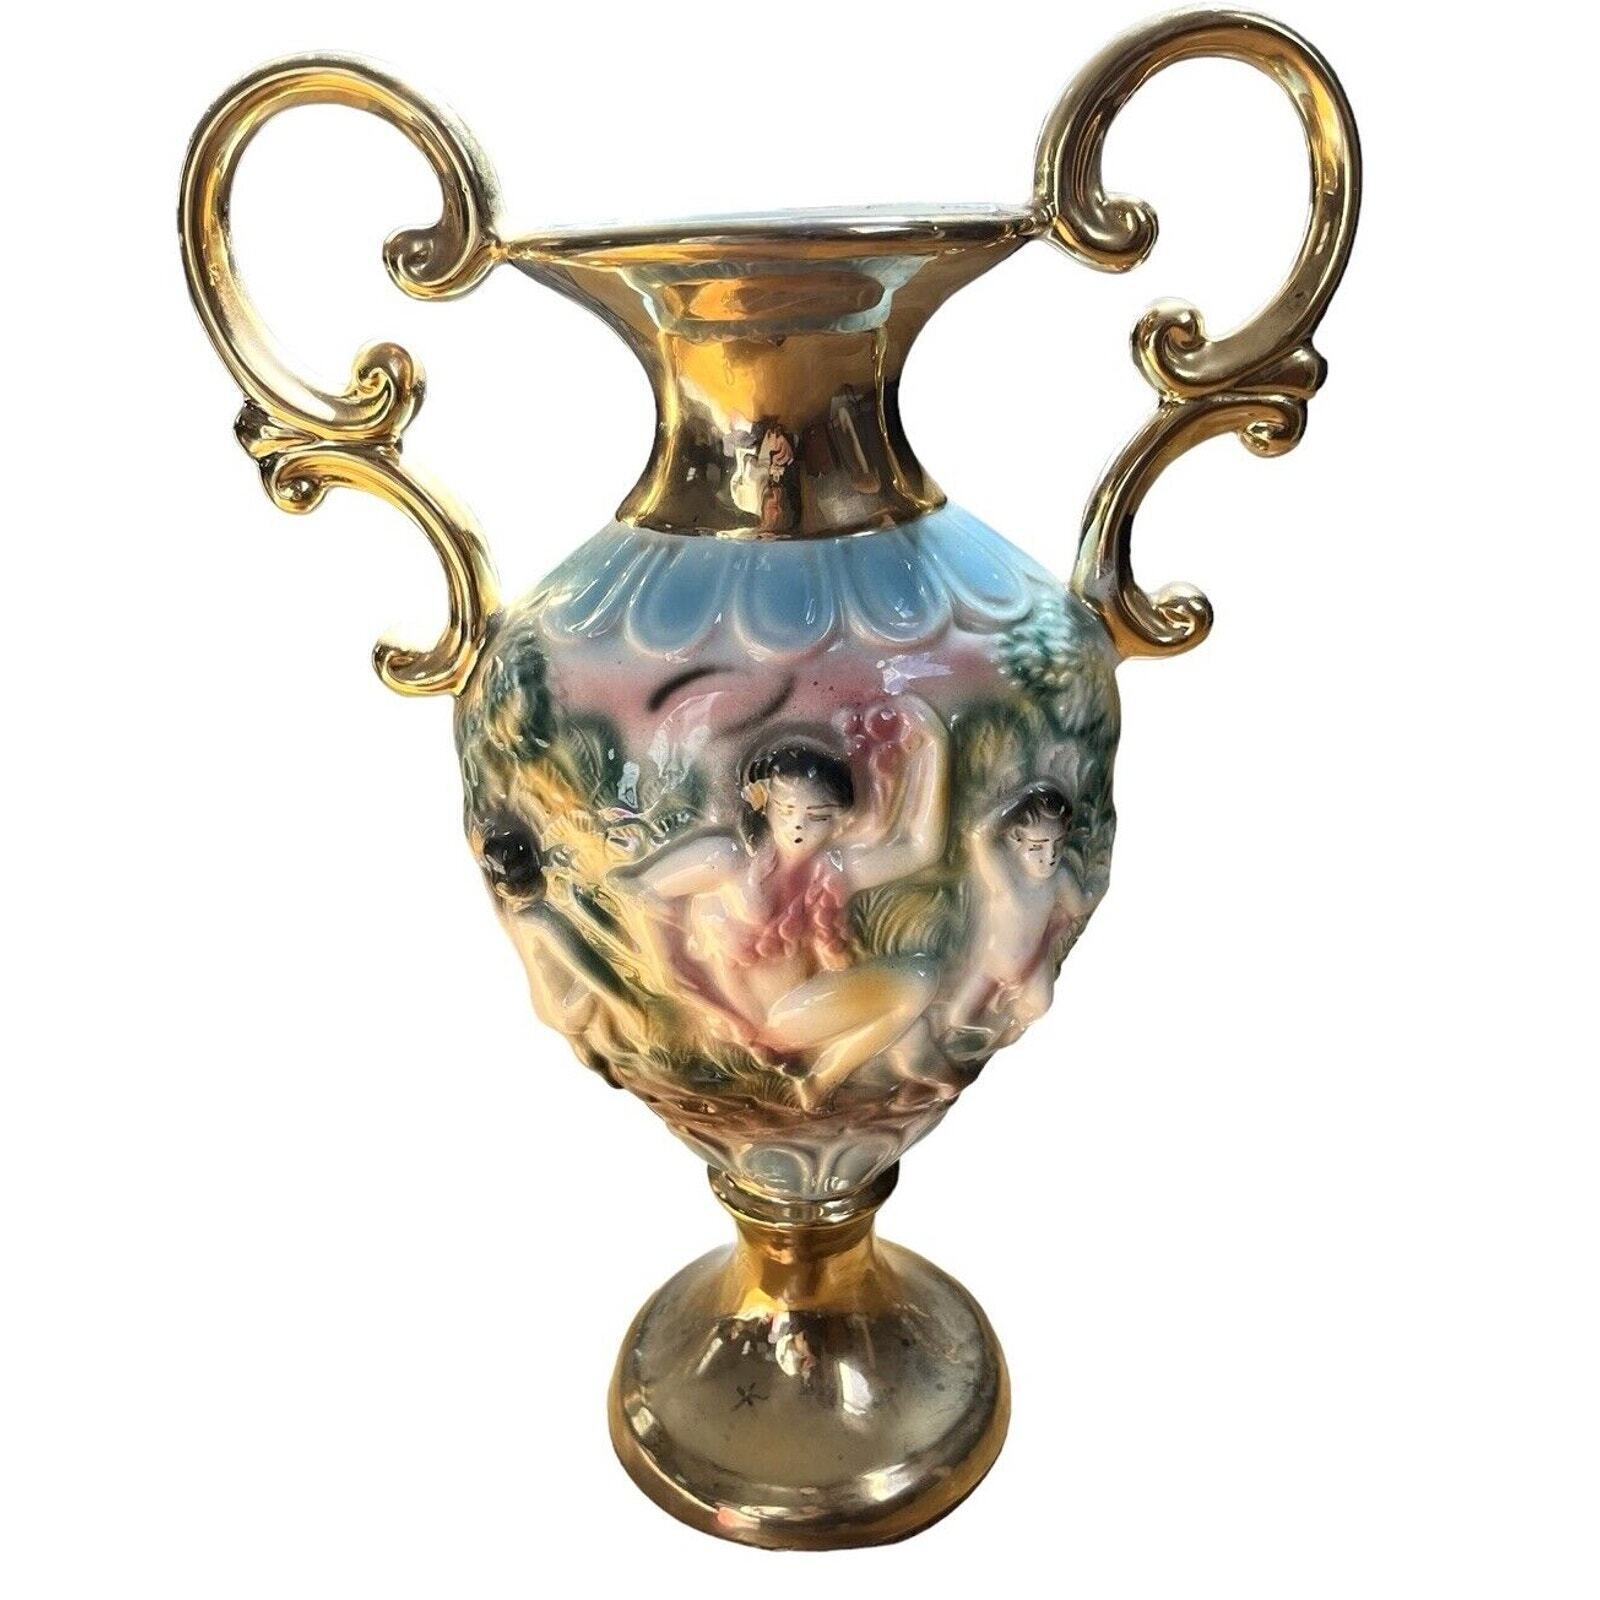 Vintage Vase Made in Italy Cherub 3d Gold Handles Hand Decorated White Elegant